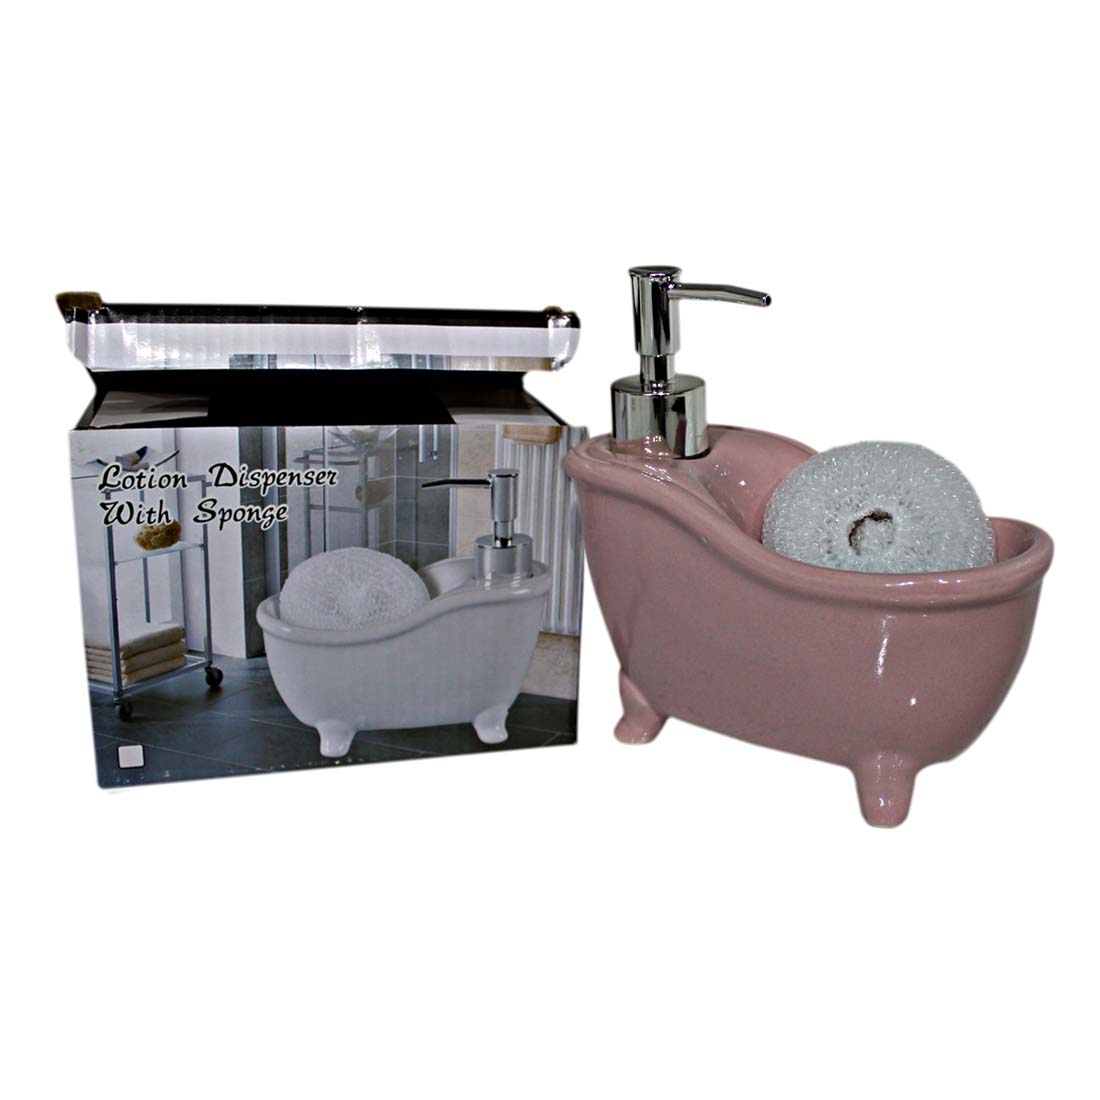 ORKA Ceramic Liquid Soap Dispenser For Bathroom/Kitchen Use Big Size (Brown)